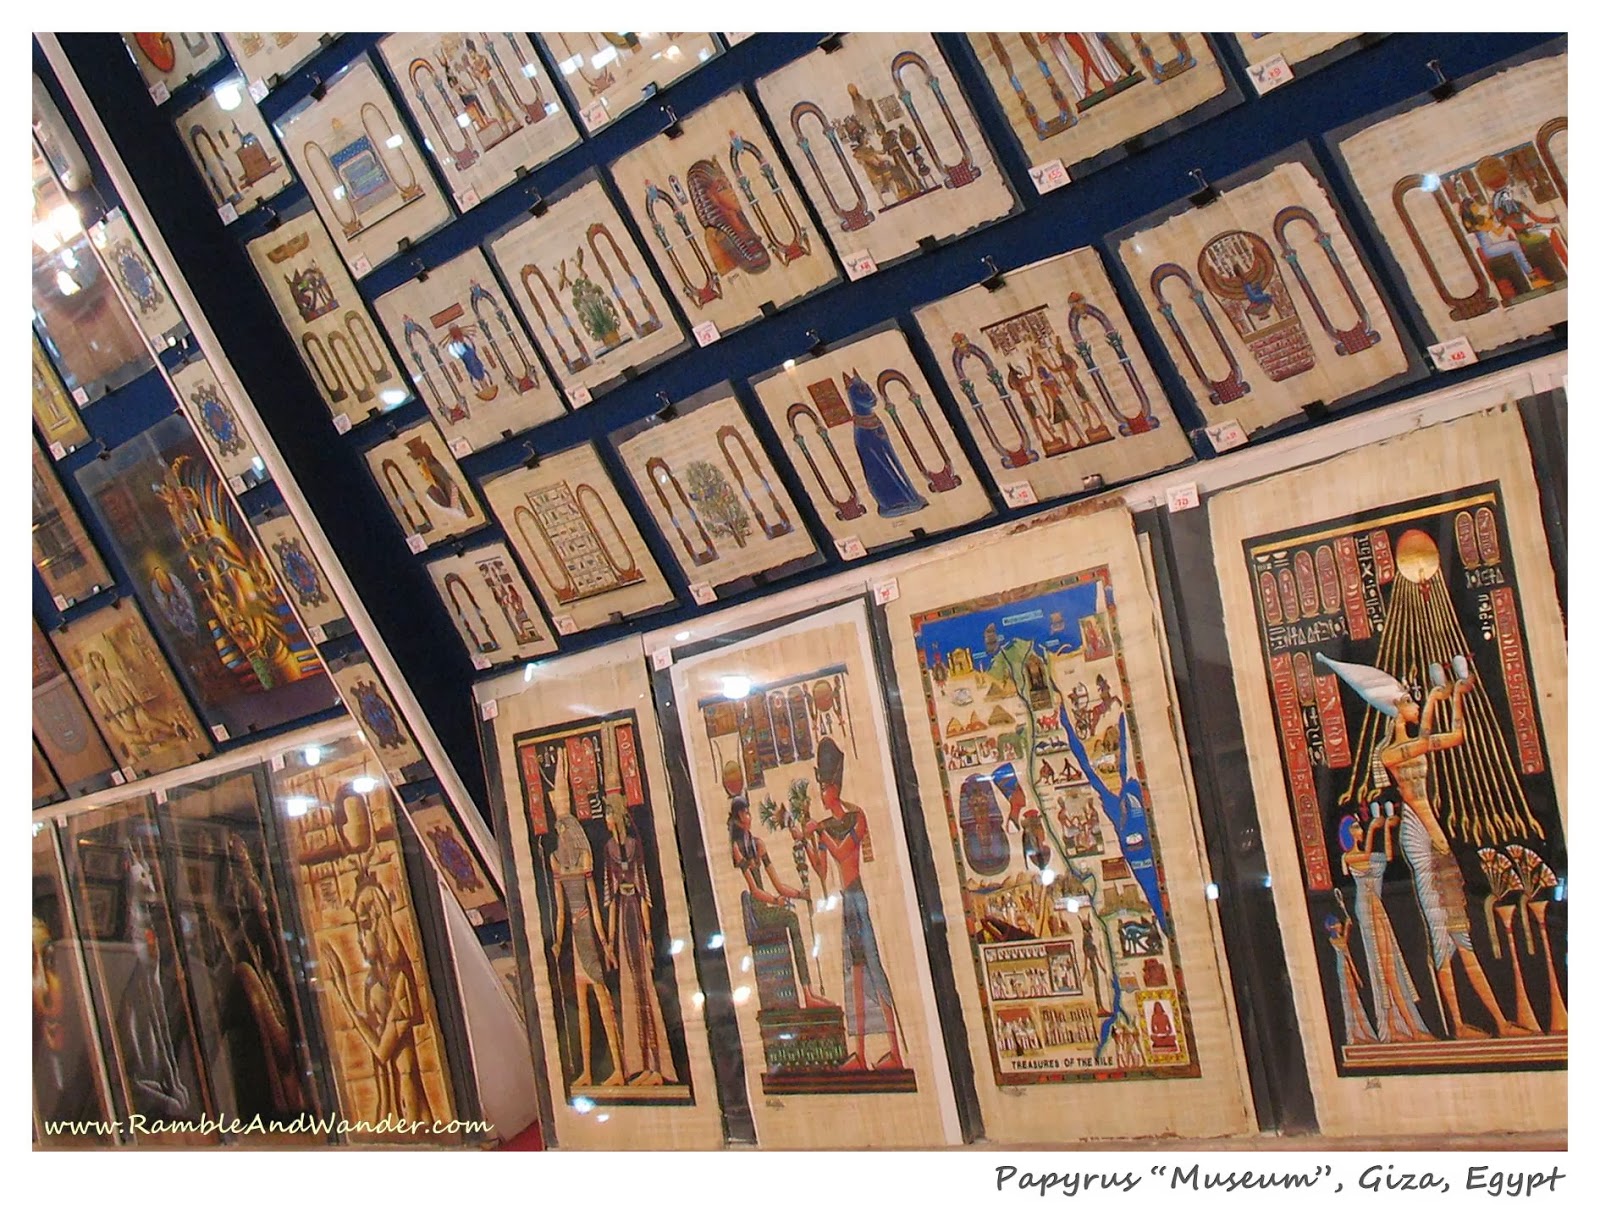 Papyrus "Museum", Cairo, Egypt | www.rambleandwander.com